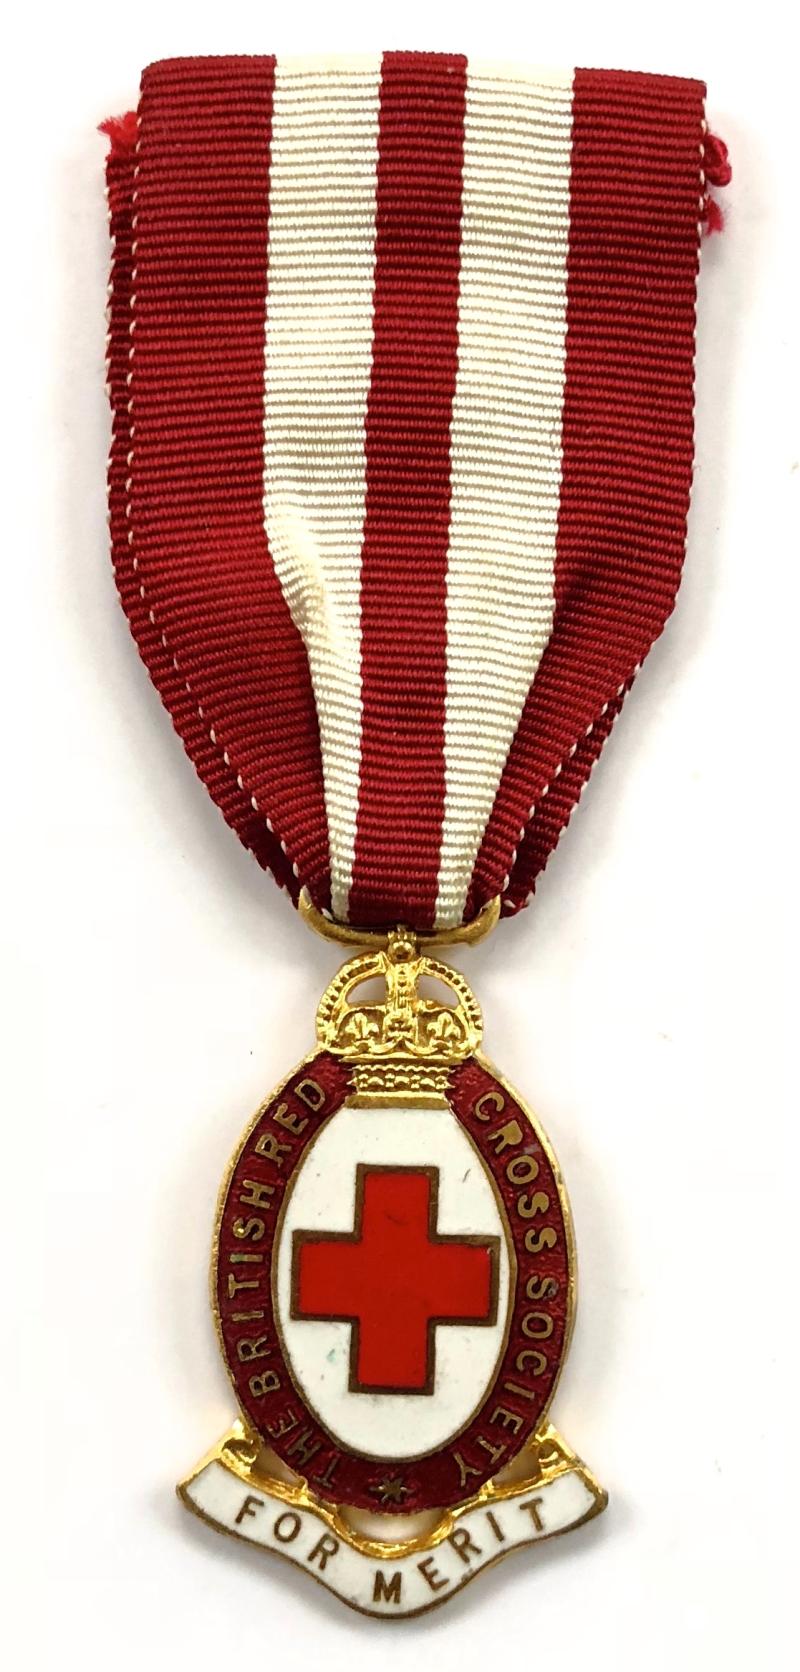 British Red Cross Society medal of merit badge